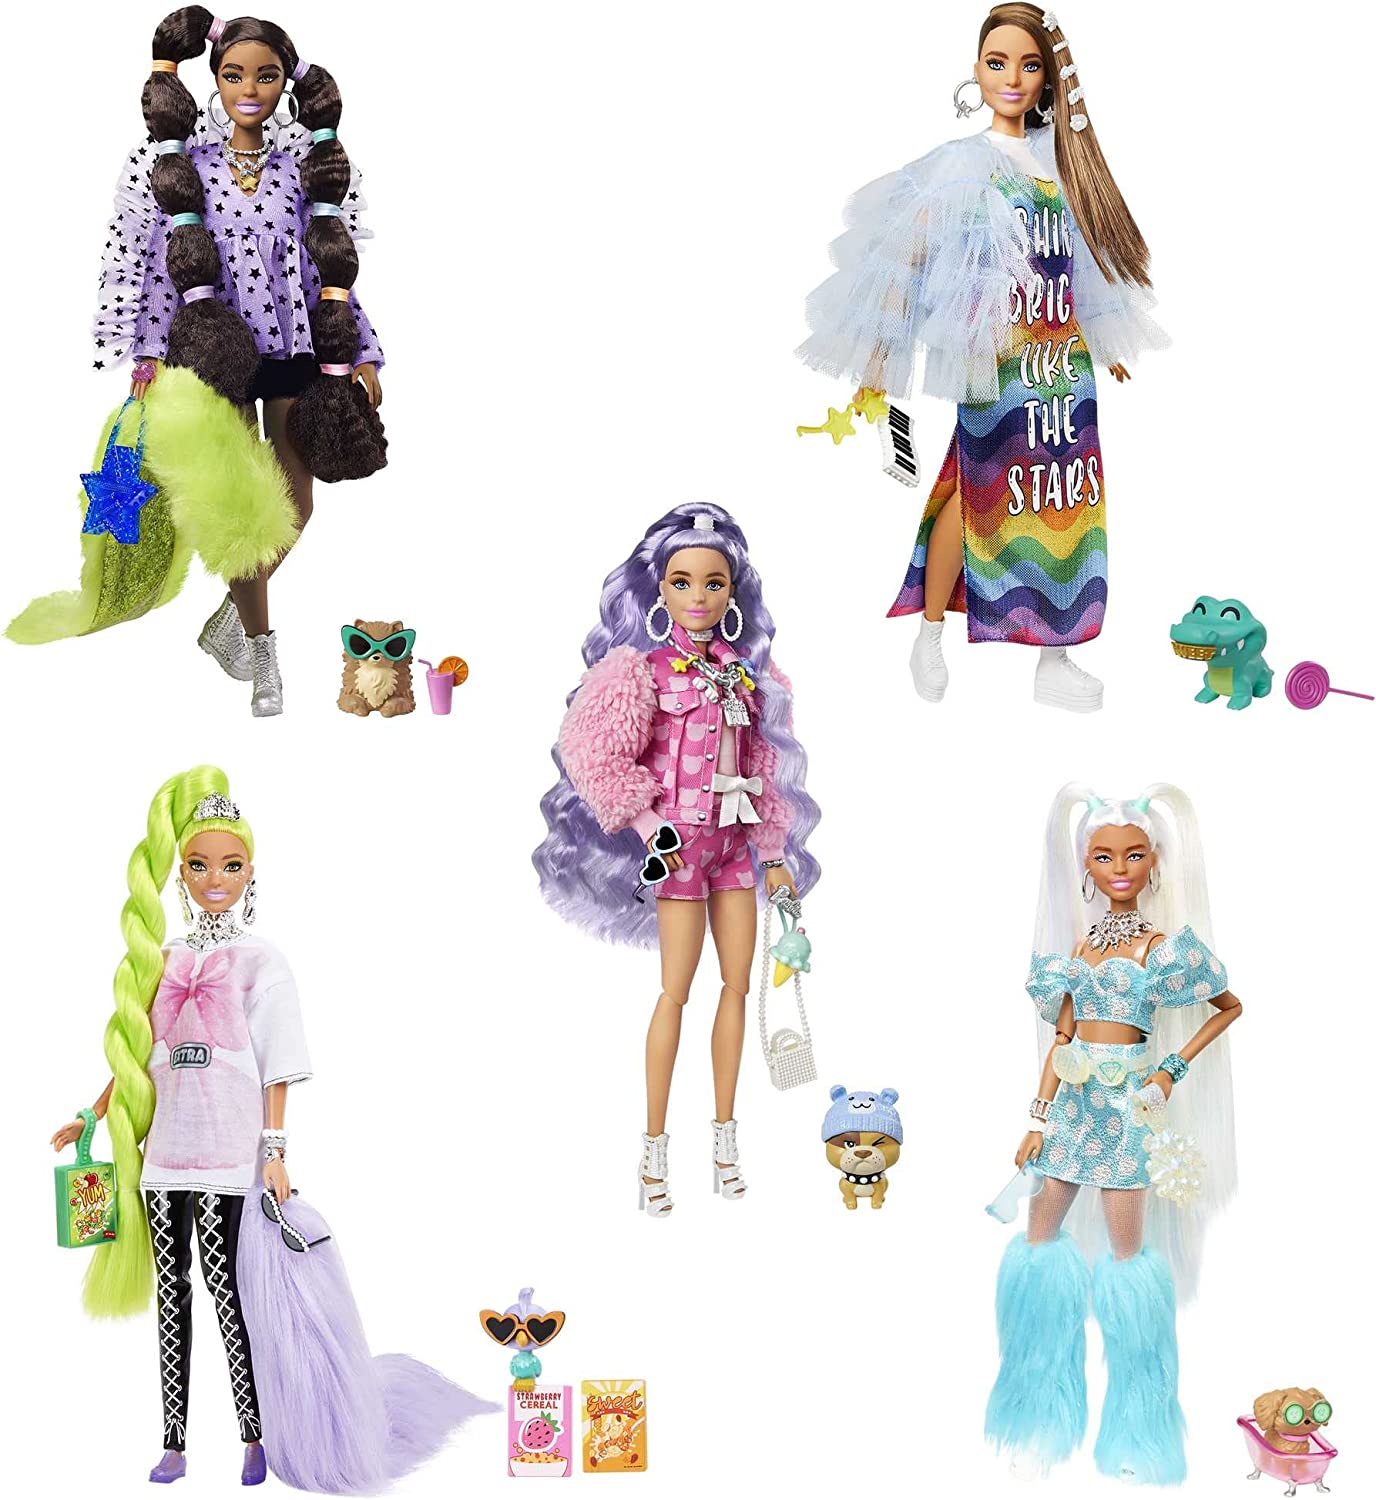 Barbie Mattel 5 Pack Collection Mini Figures